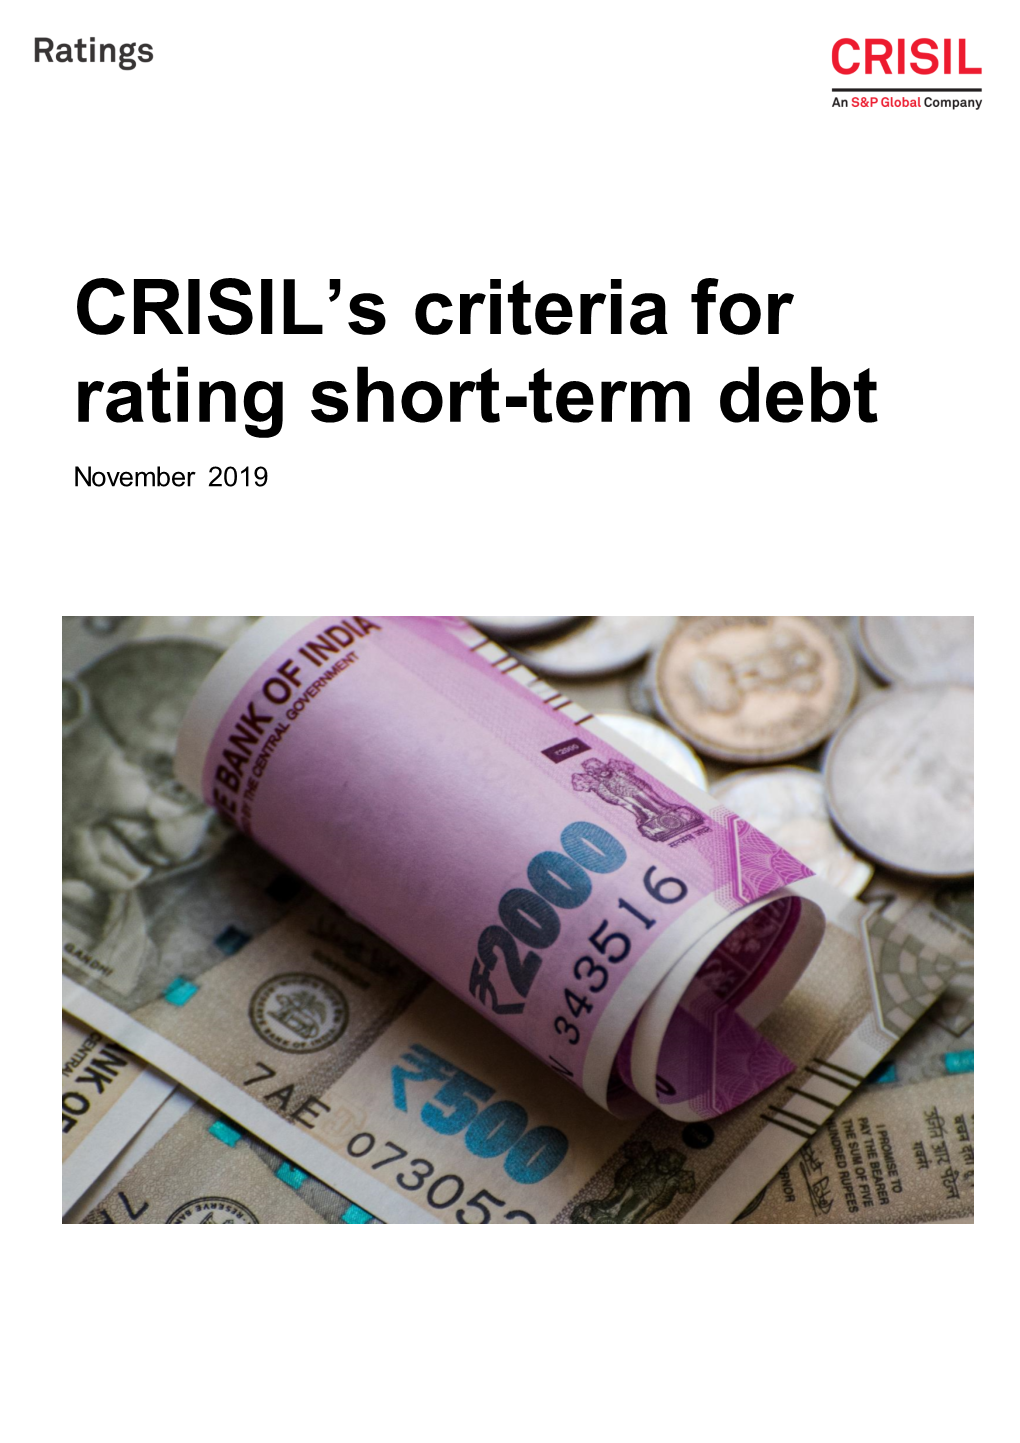 CRISIL's Criteria for Rating Short-Term Debt